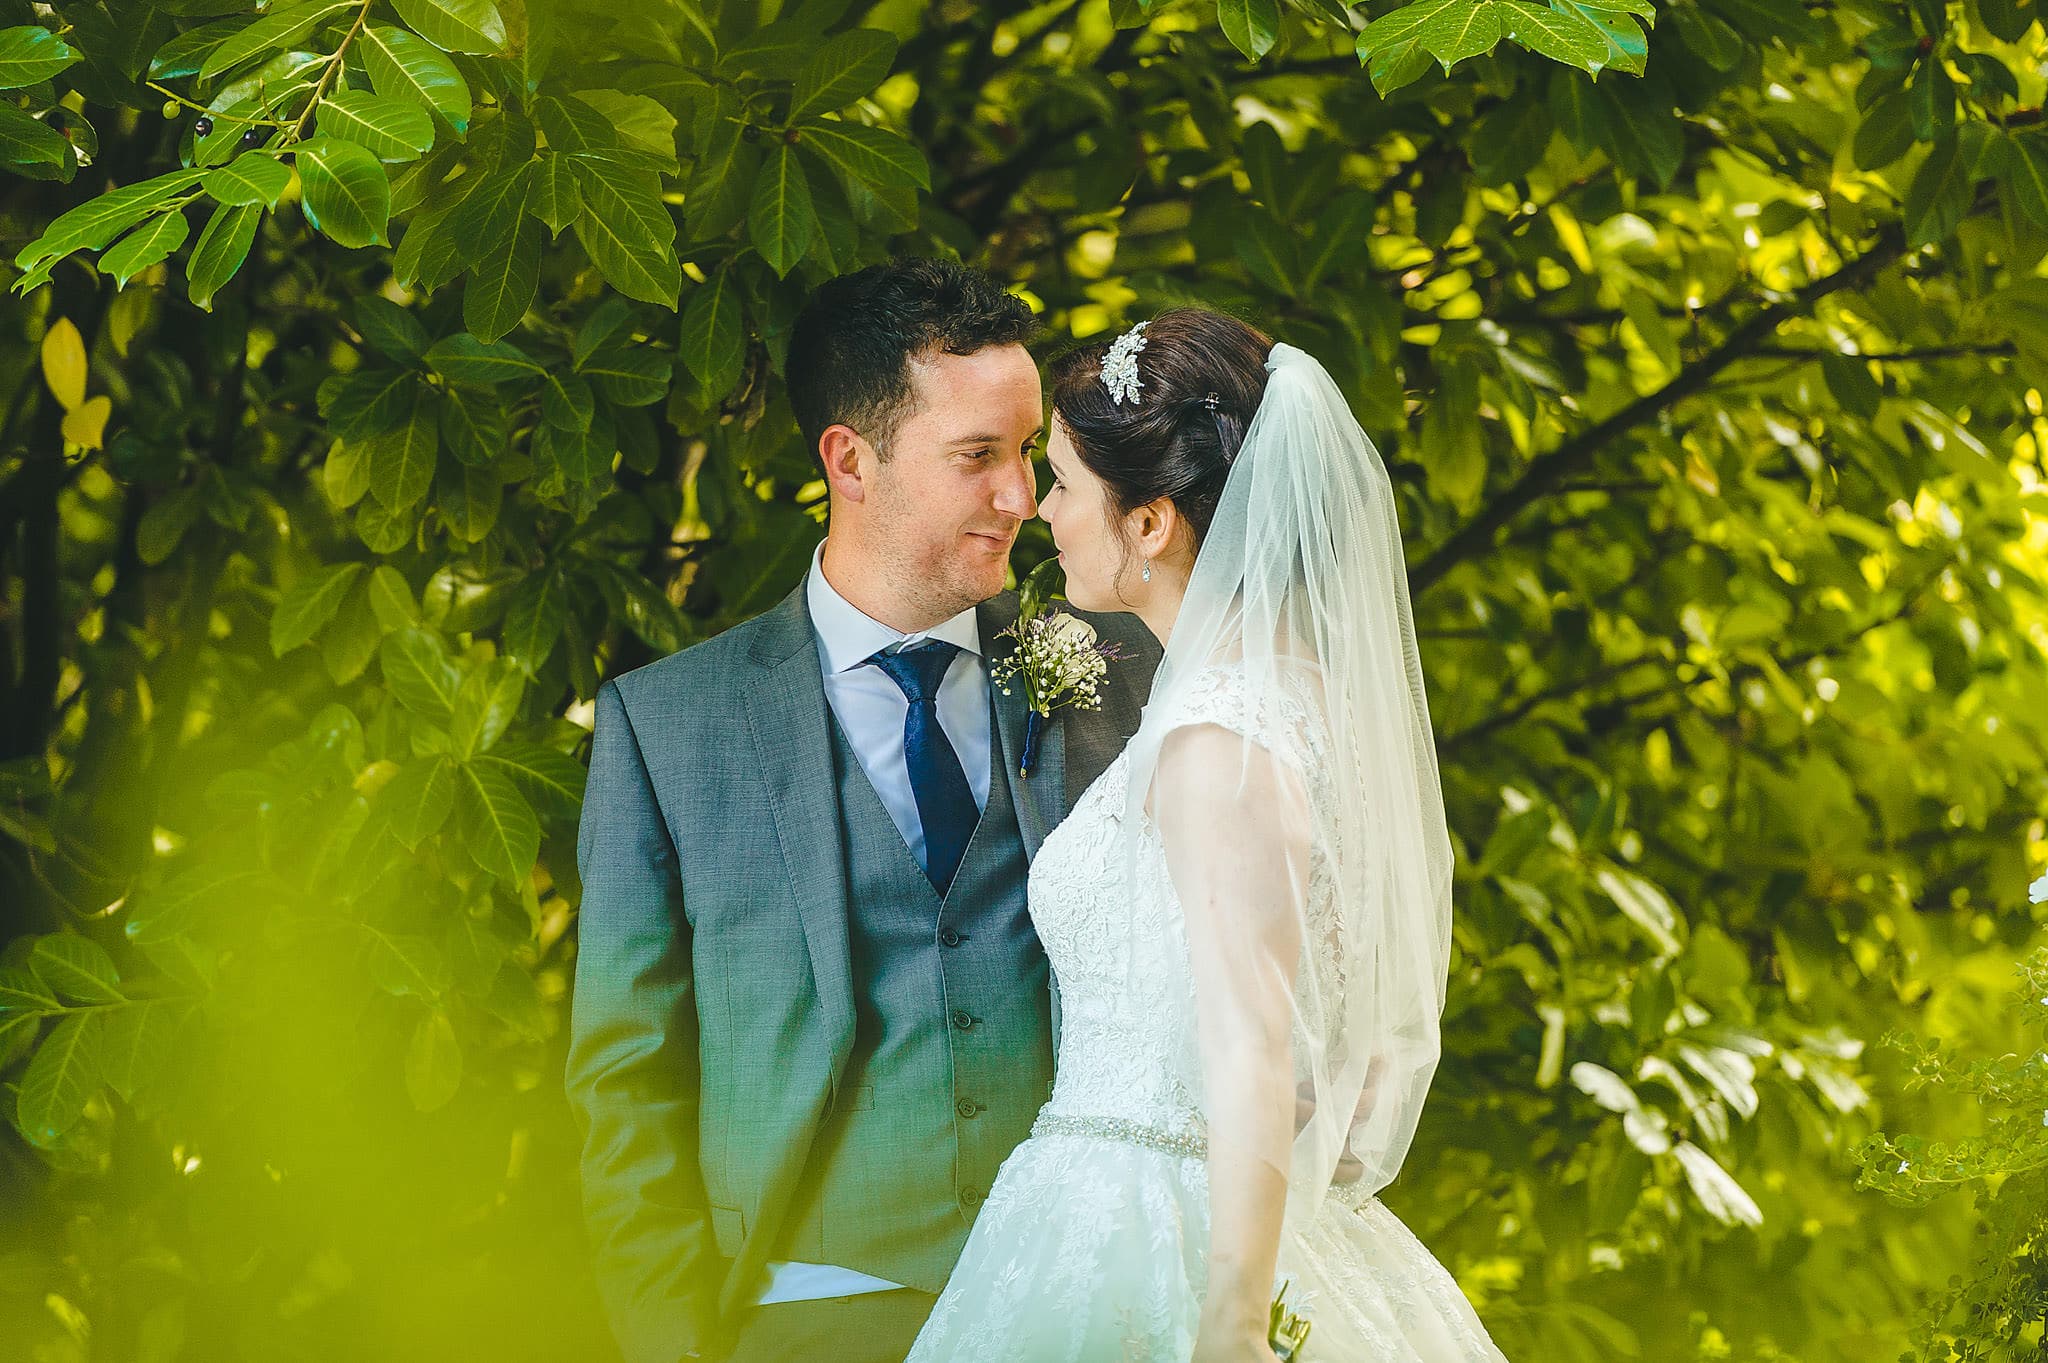 Munstone House Hereford wedding photography | Anna + Ben 2